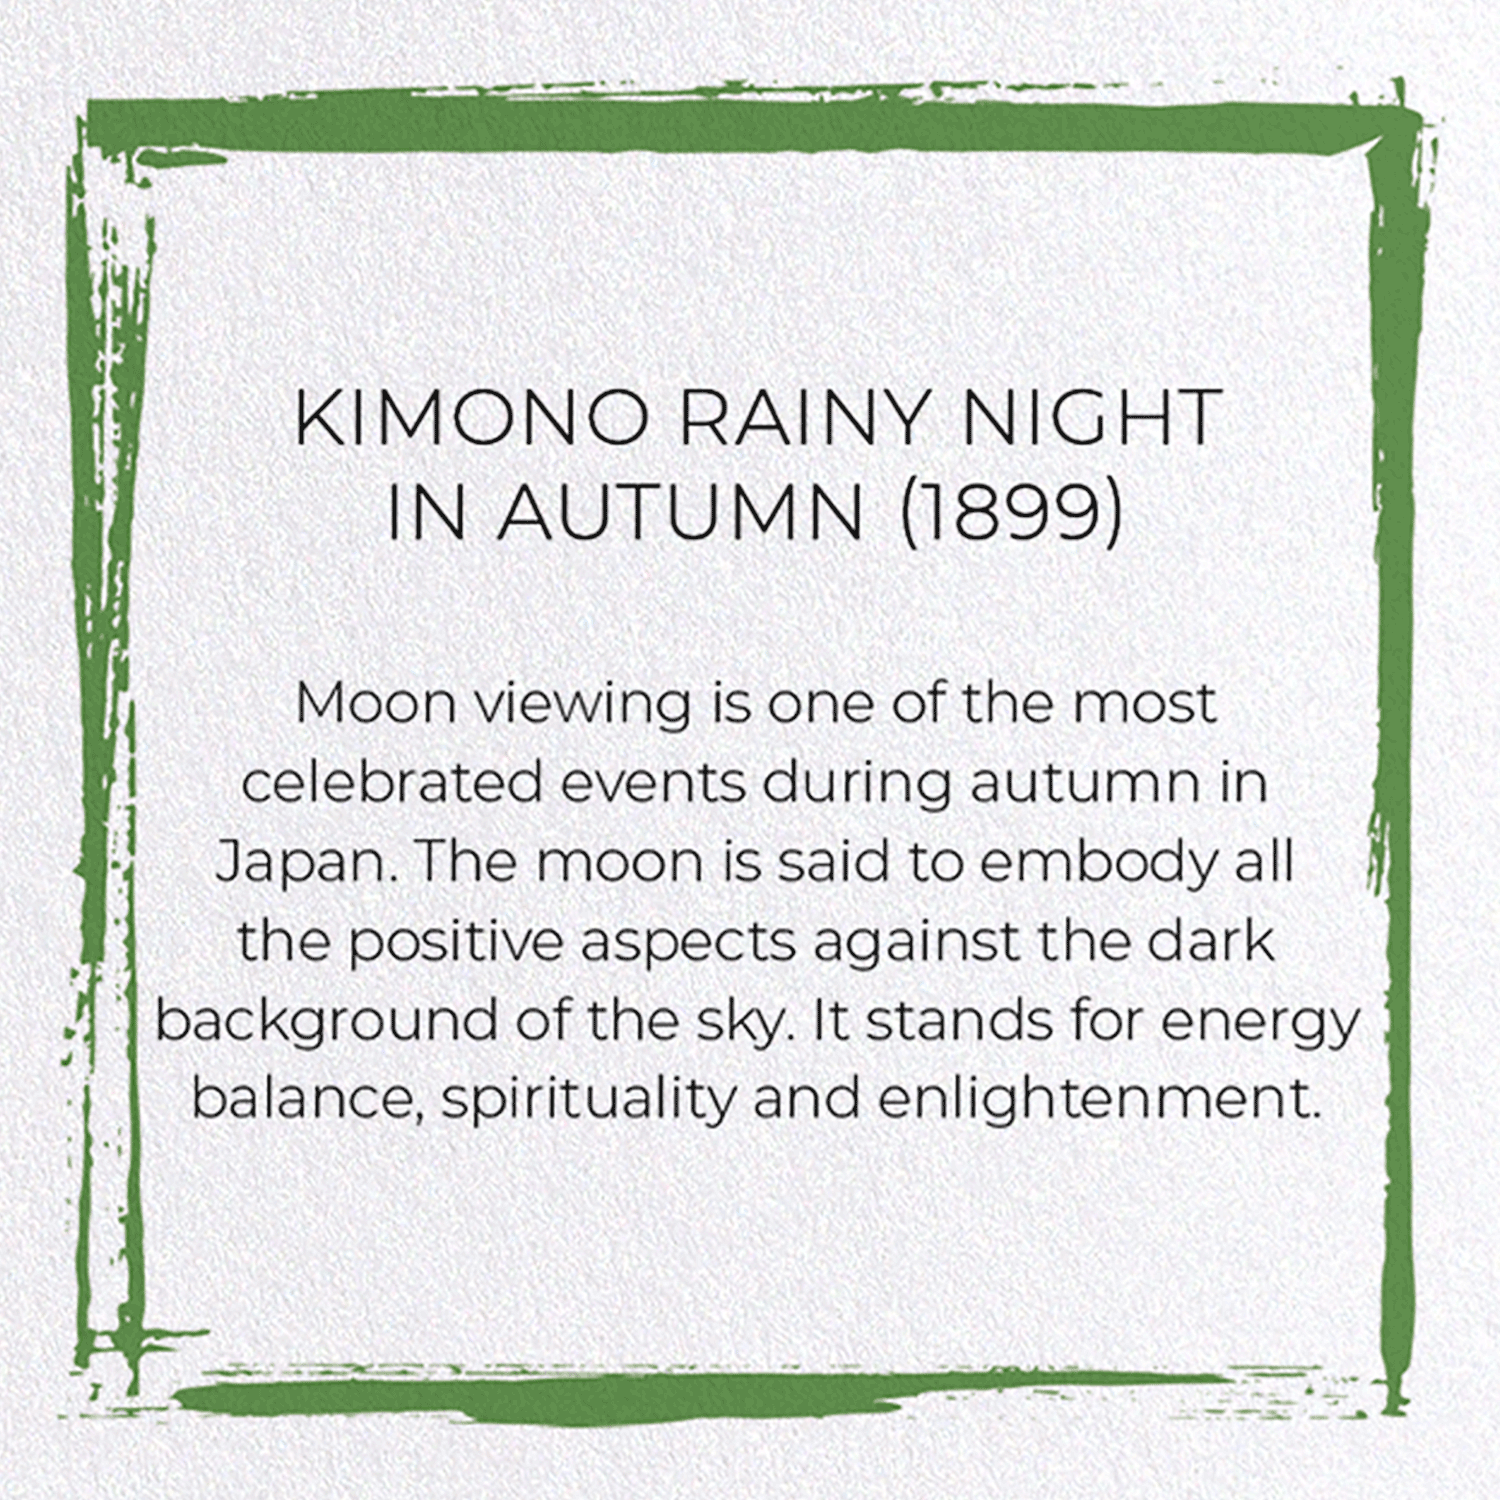 KIMONO RAINY NIGHT IN AUTUMN (1899)